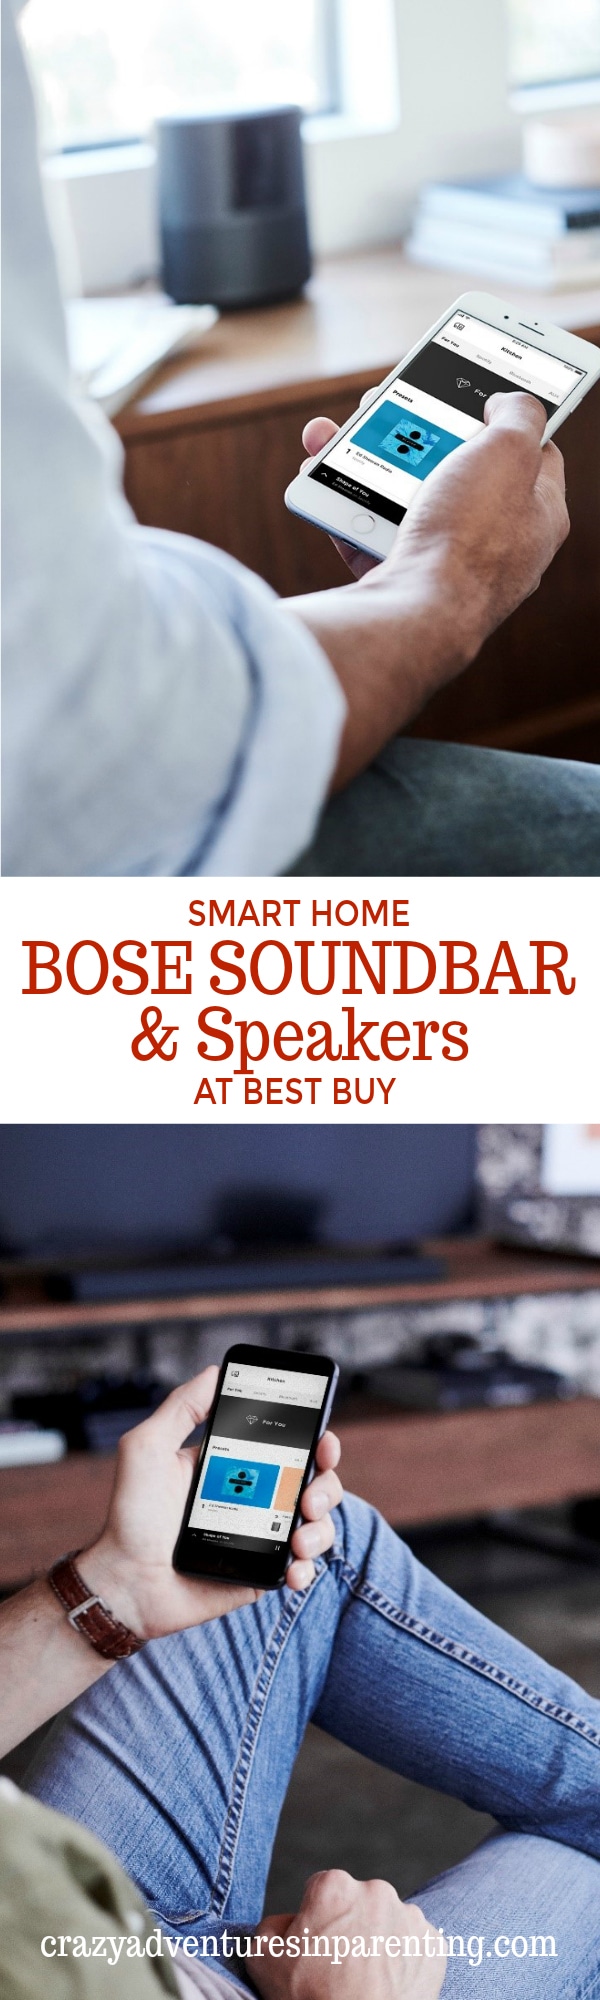 Smart Home Bose Soundbar and Speakers at Best Buy